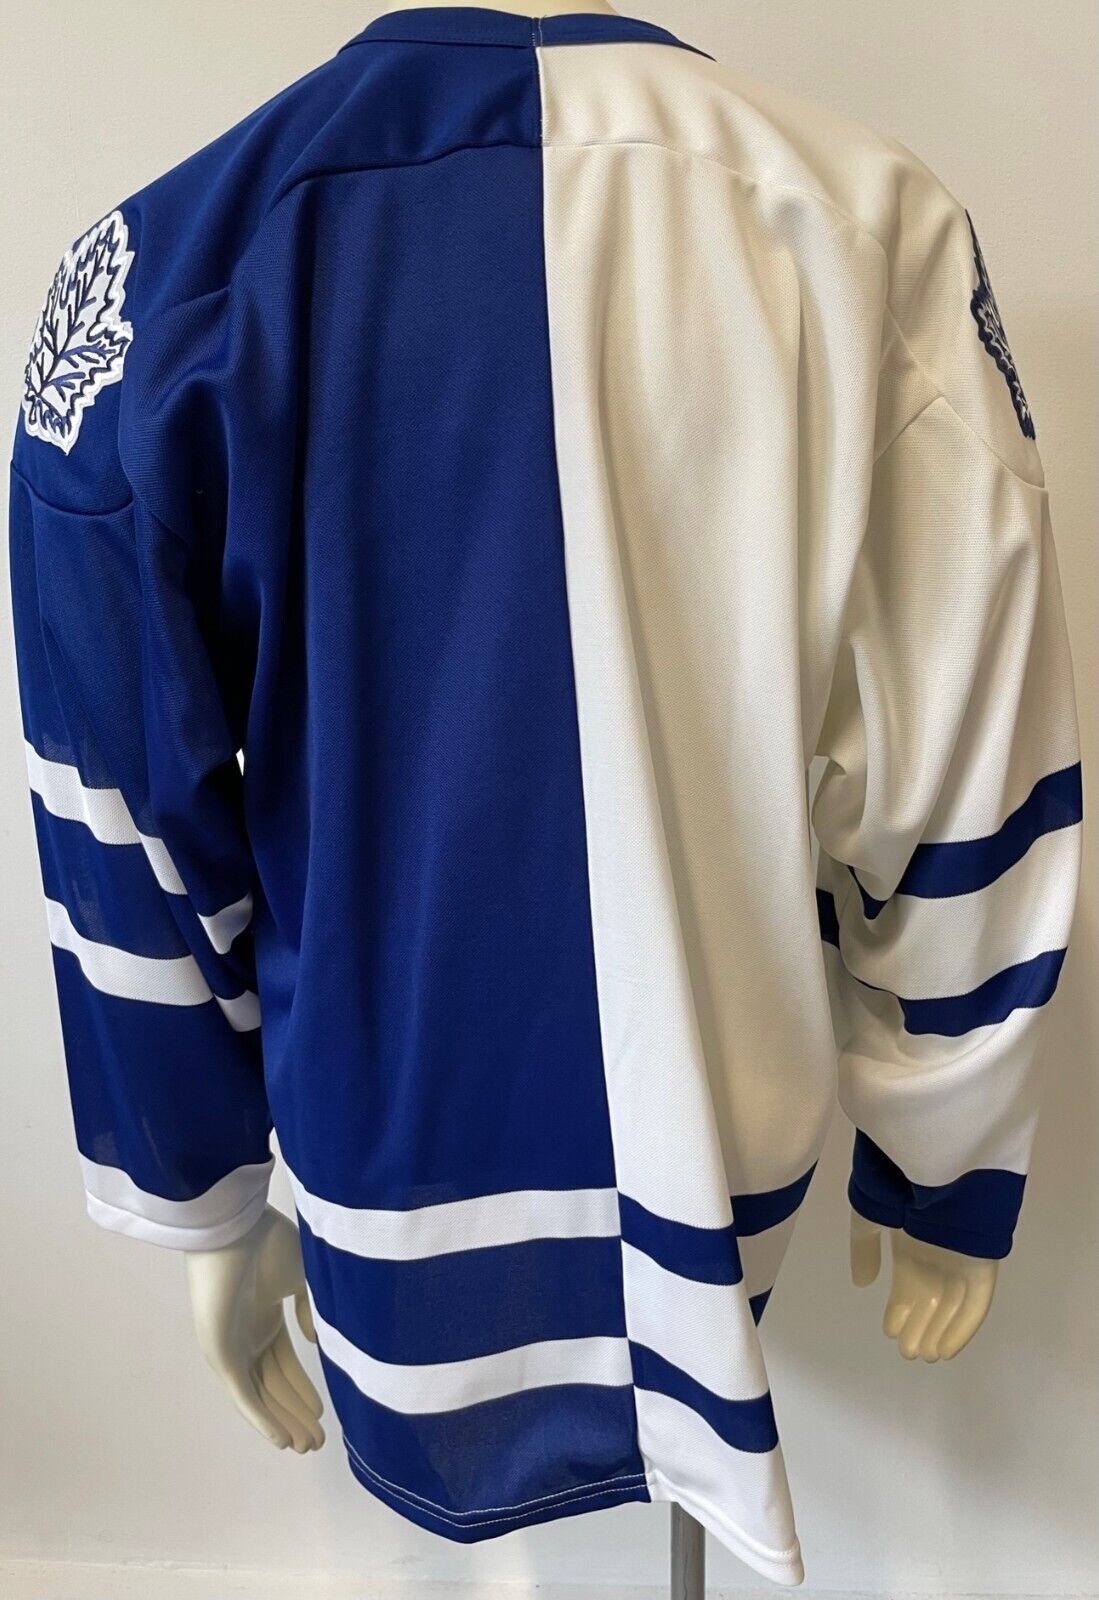 90's Center Ice / CCM Maple Leafs Jersey : r/hockeyjerseys